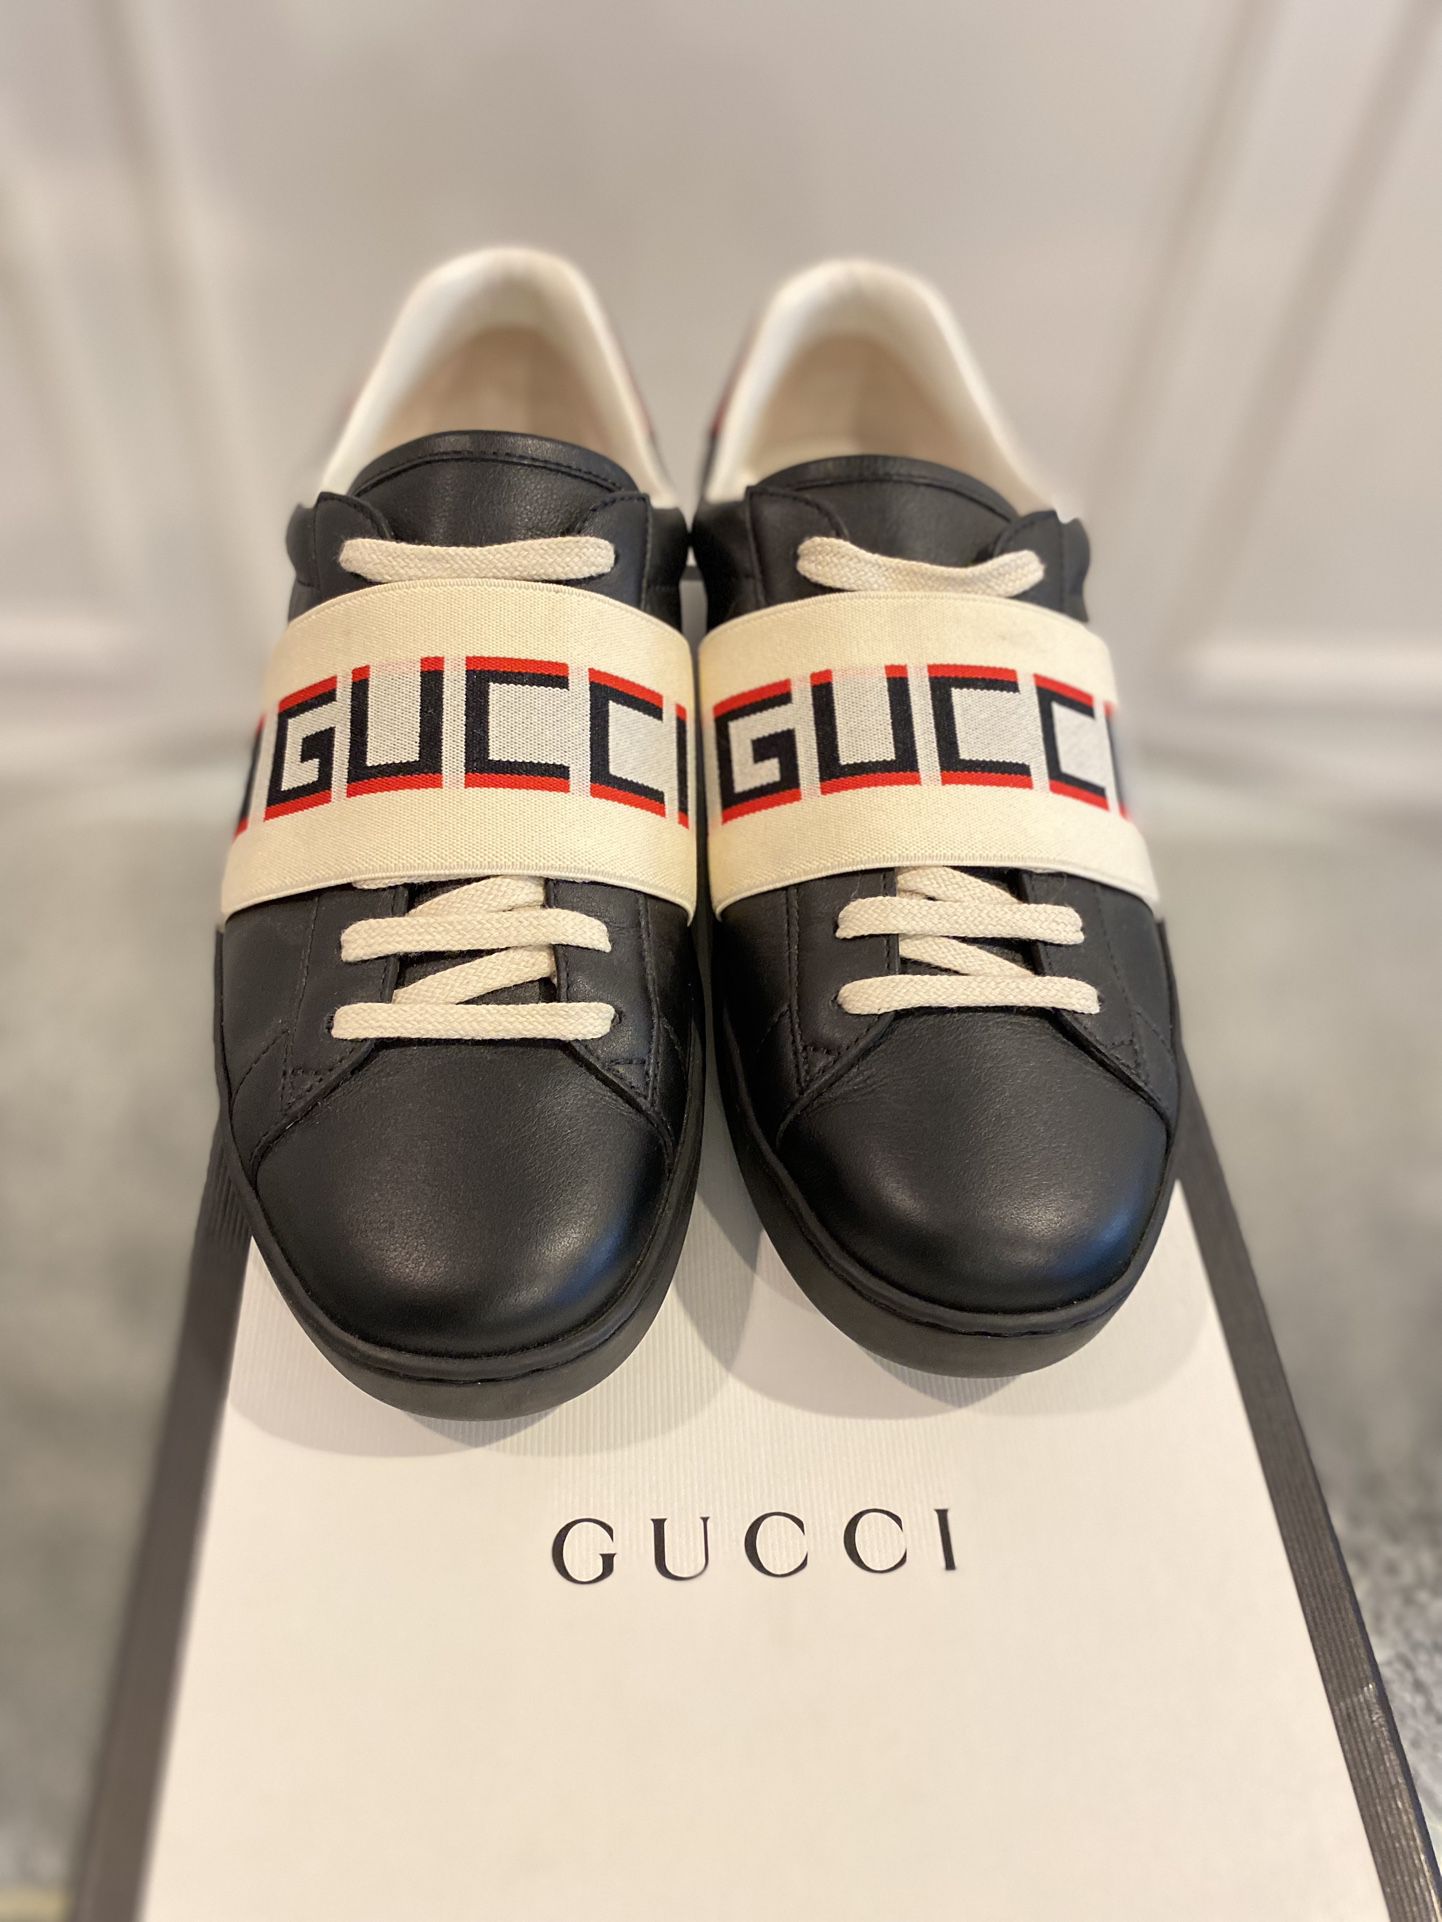 Gucci Ace Stripe Leather Black